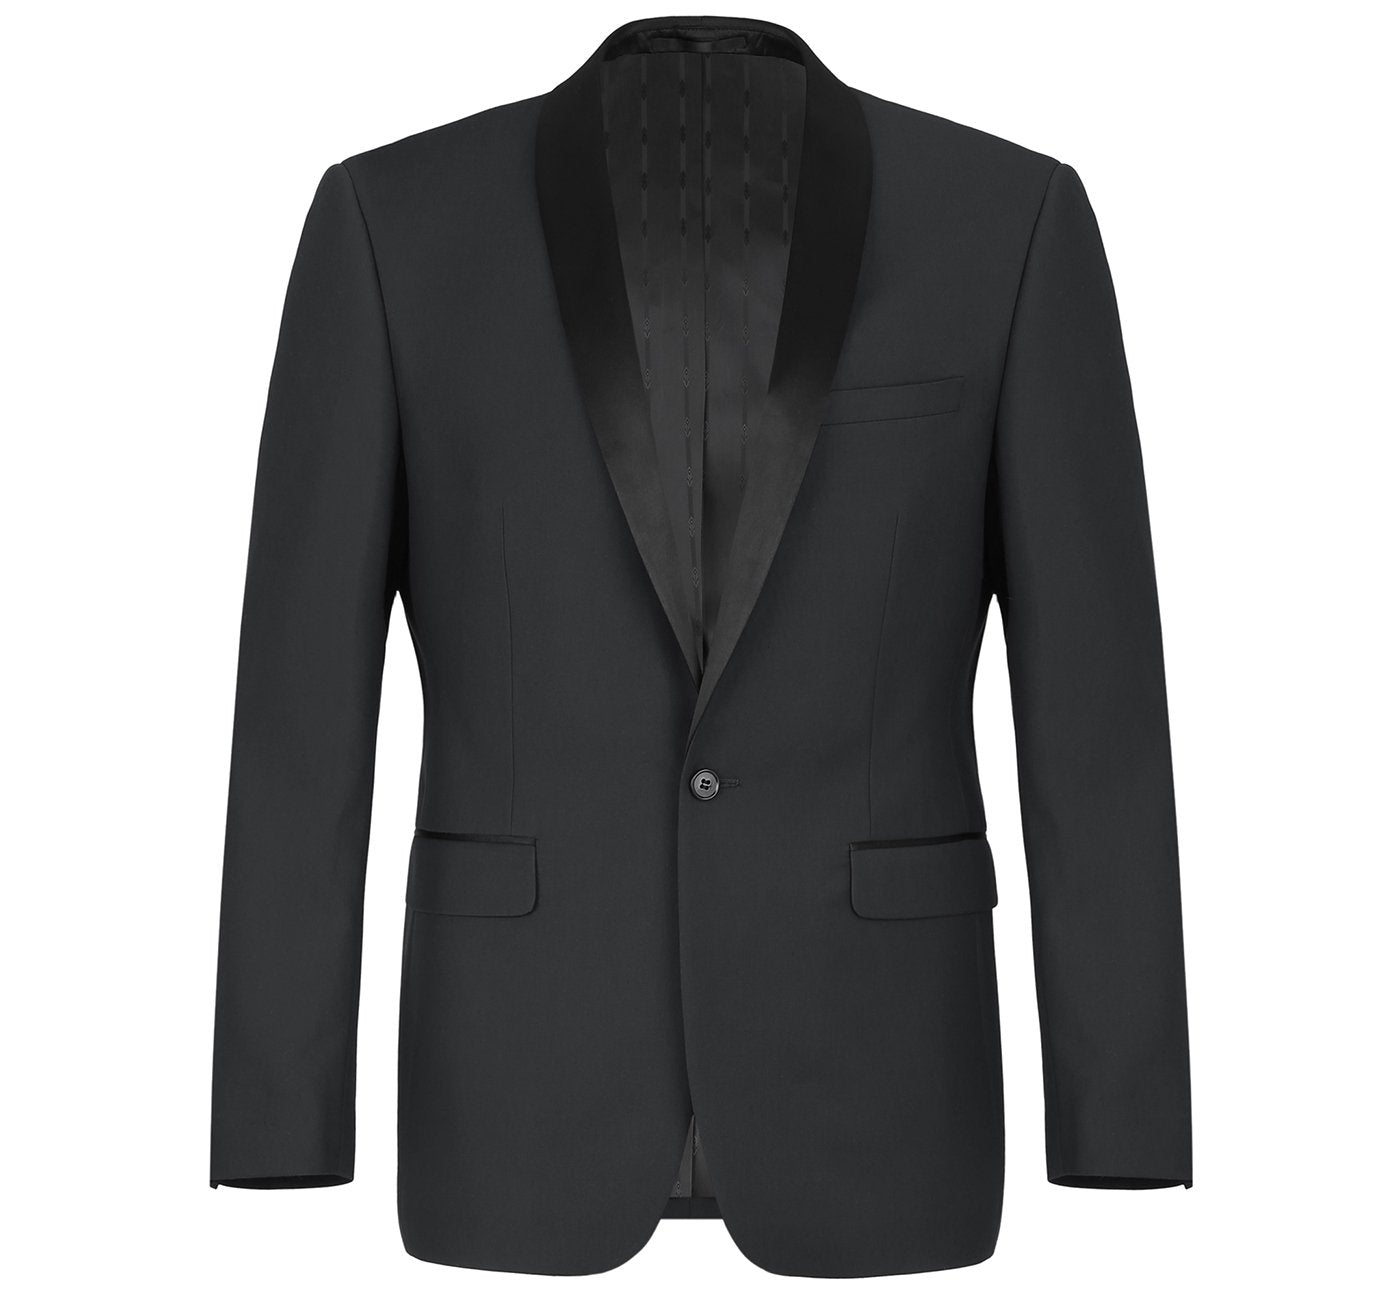 201-1 Men's Black Shawl Lapel Slim Fit 2-Piece Tuxedo